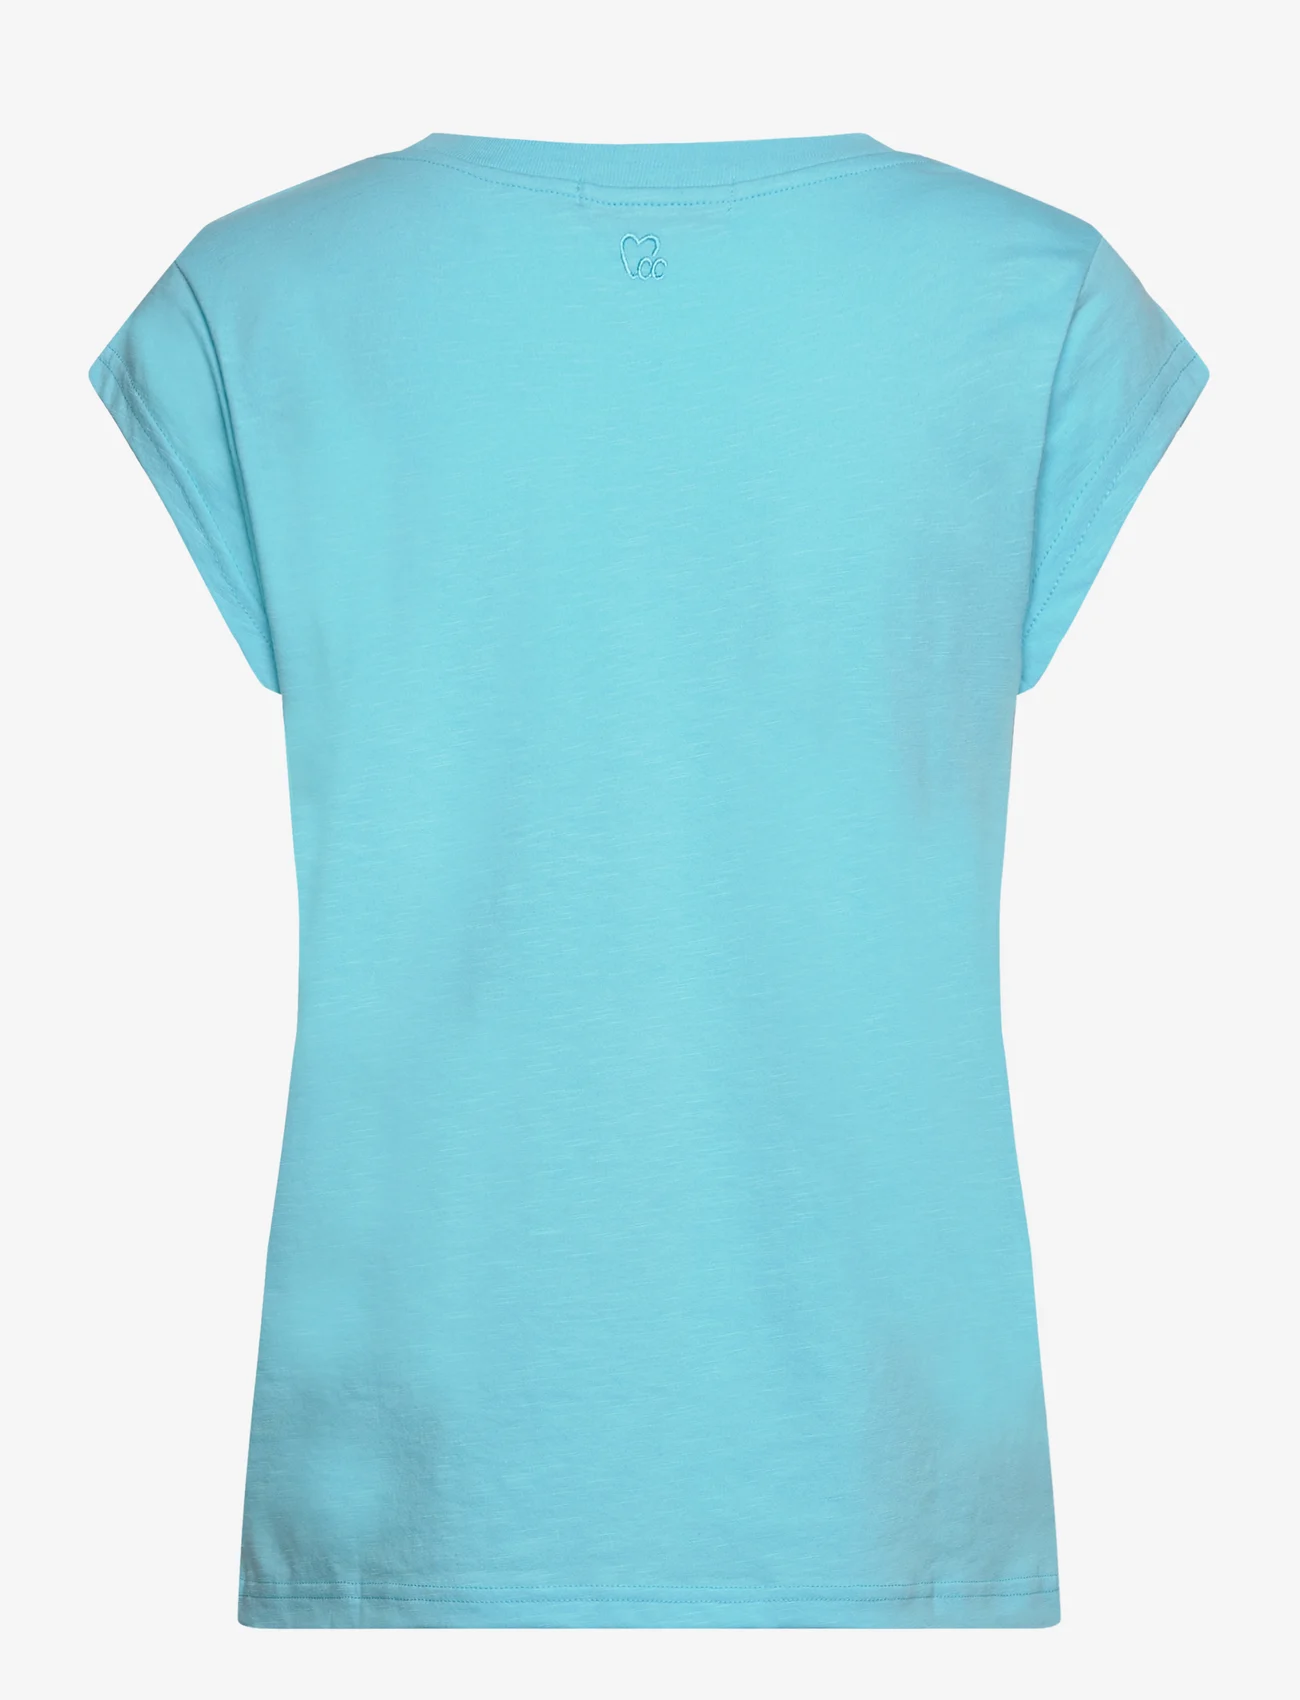 Coster Copenhagen - CC Heart basic t-shirt - t-shirts - aqua blue - 1